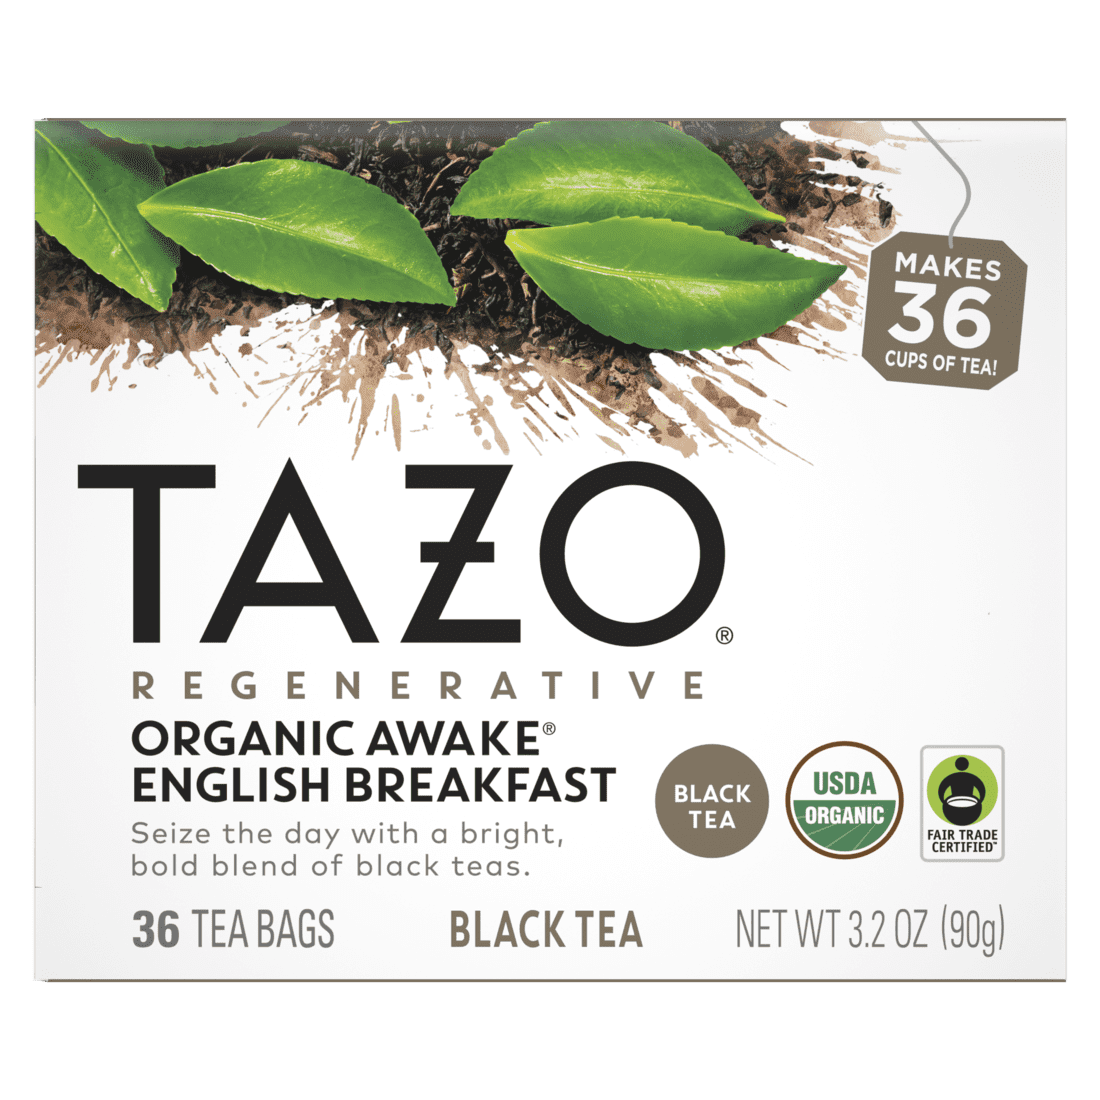 Tazo Green Tea Latte, 32 fl oz - Foods Co.